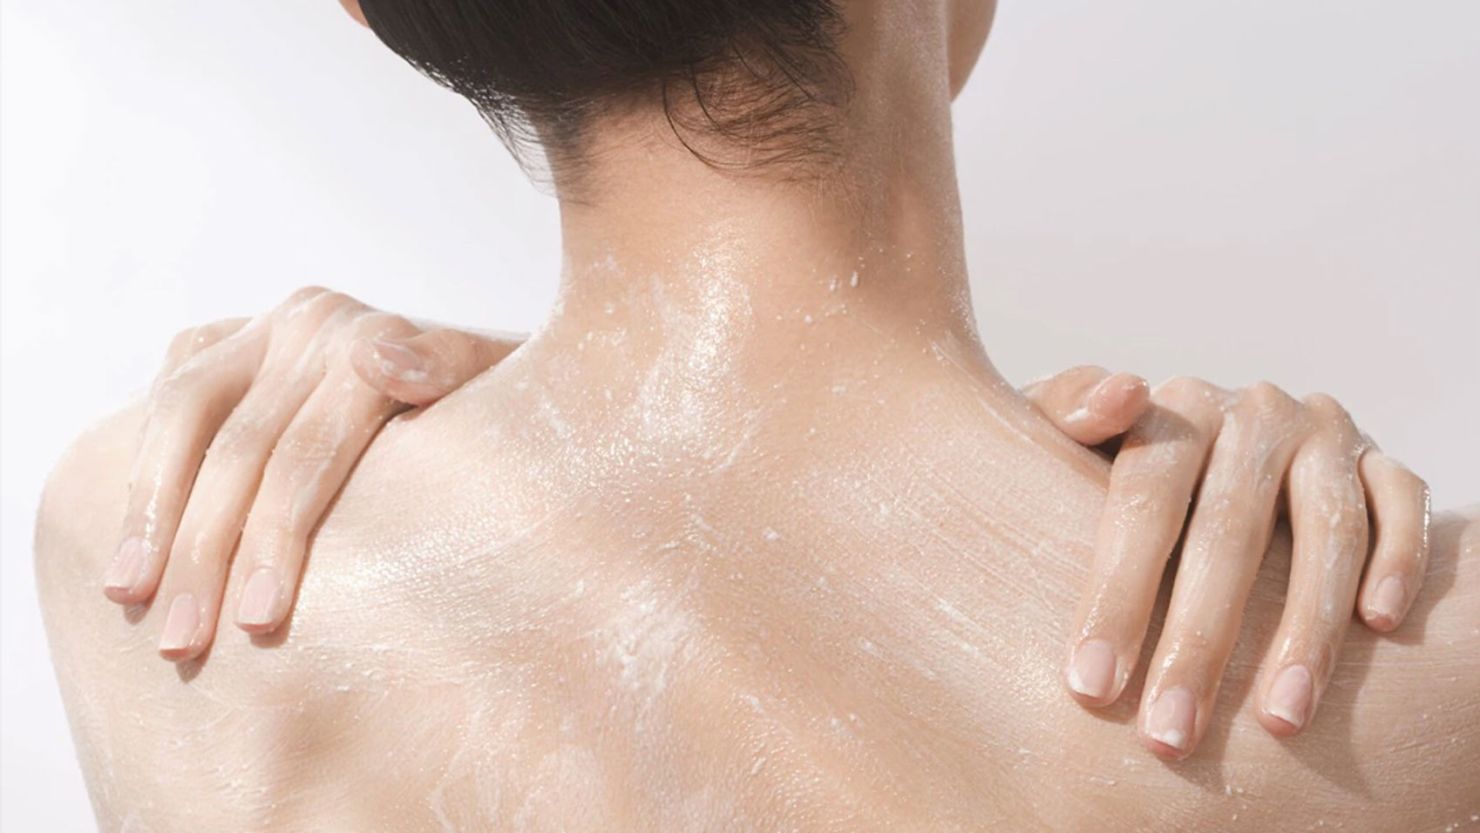 How to Use a Pumice Stone to Exfoliate Skin, Per Dermatologists